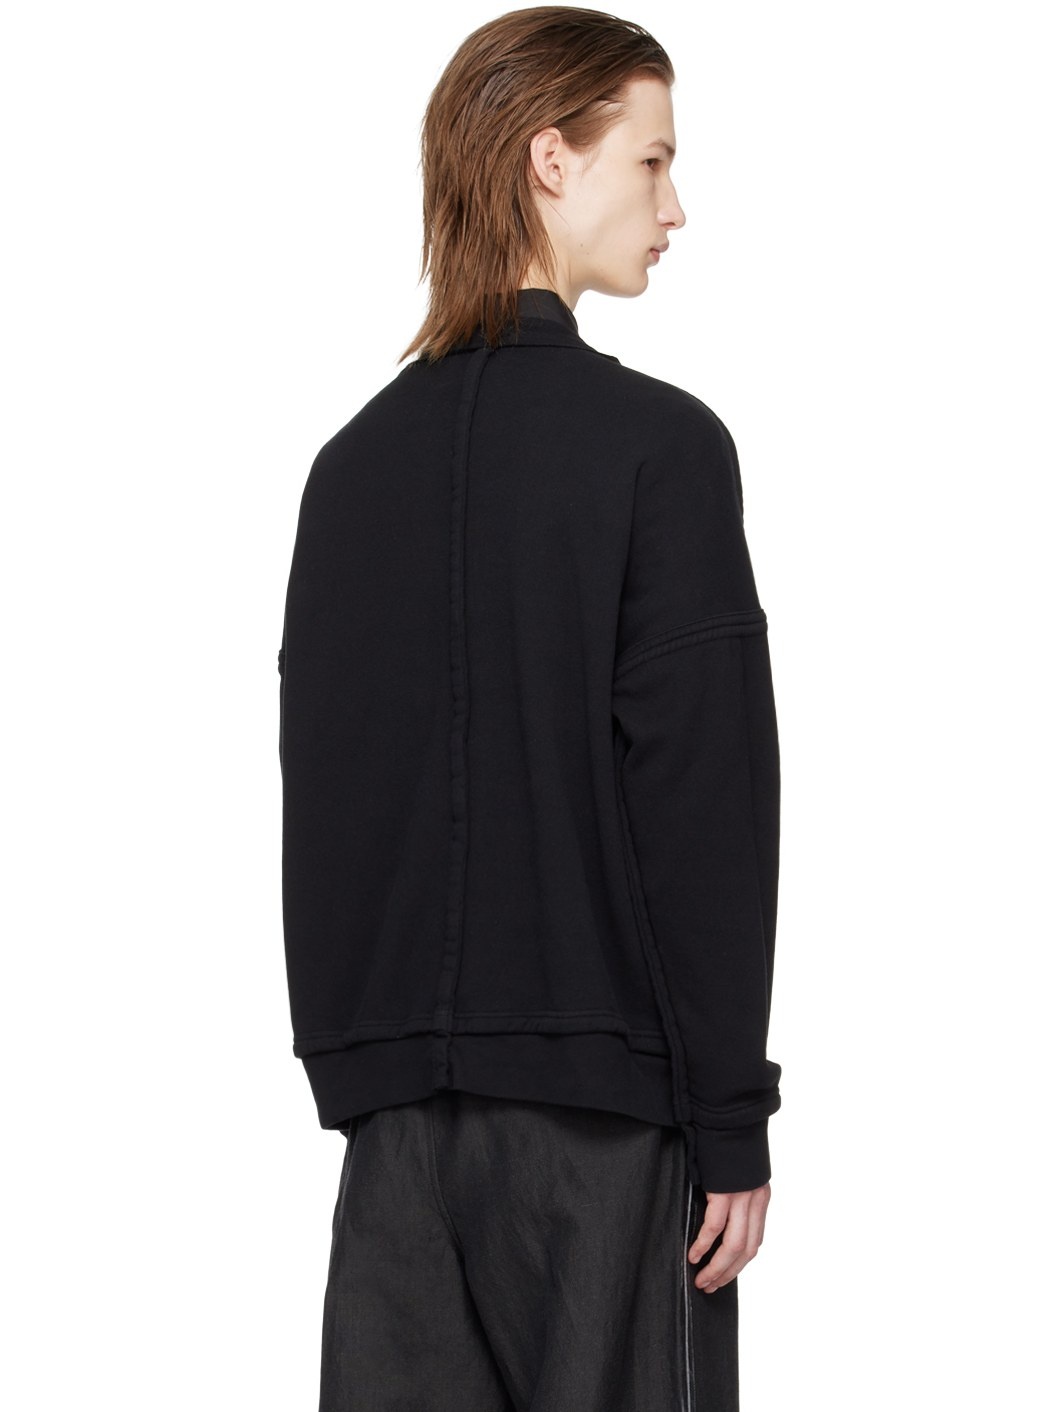 Black Patches Sweatshirt - 3